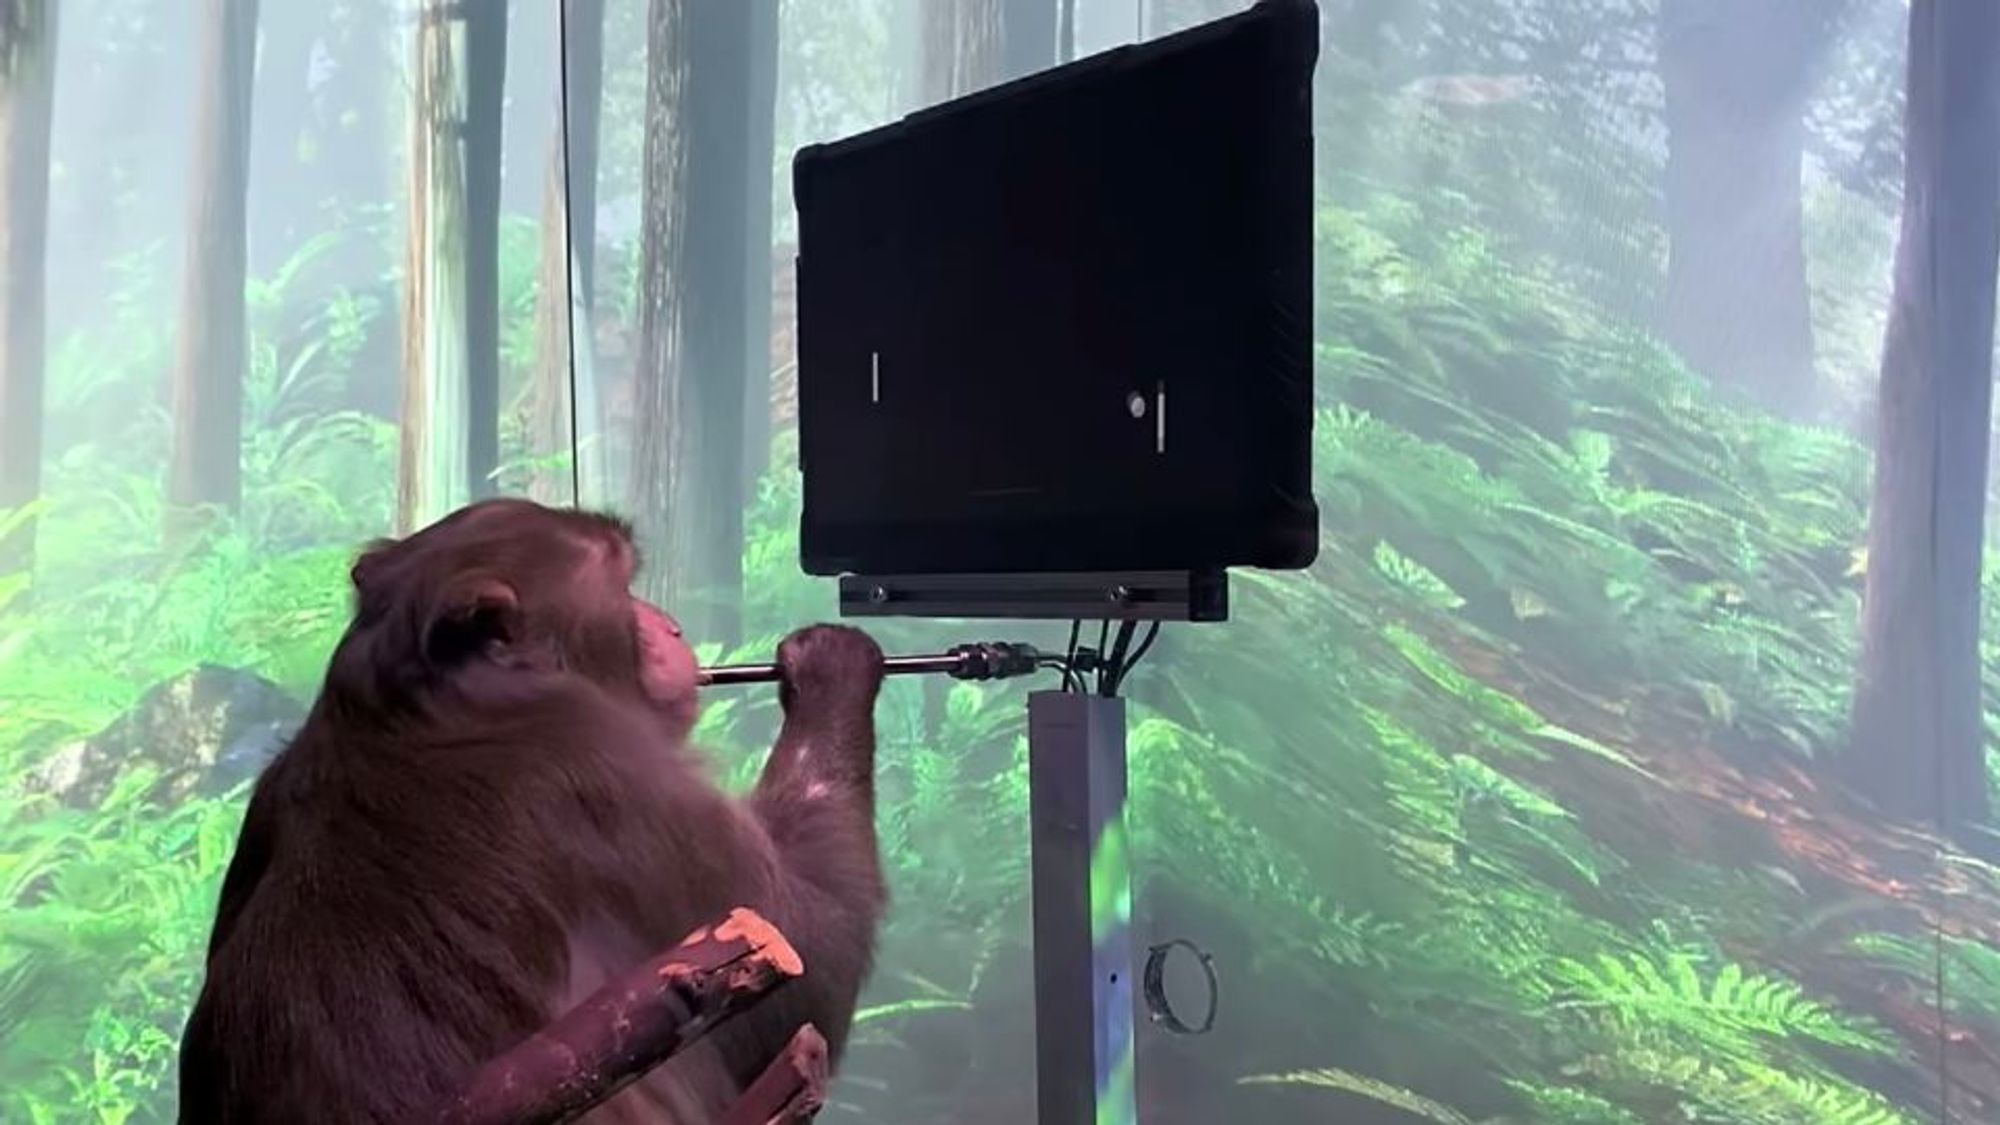 Elon Musk's Neuralink confirms monkeys died in project, denies animal cruelty claims | CNN Business